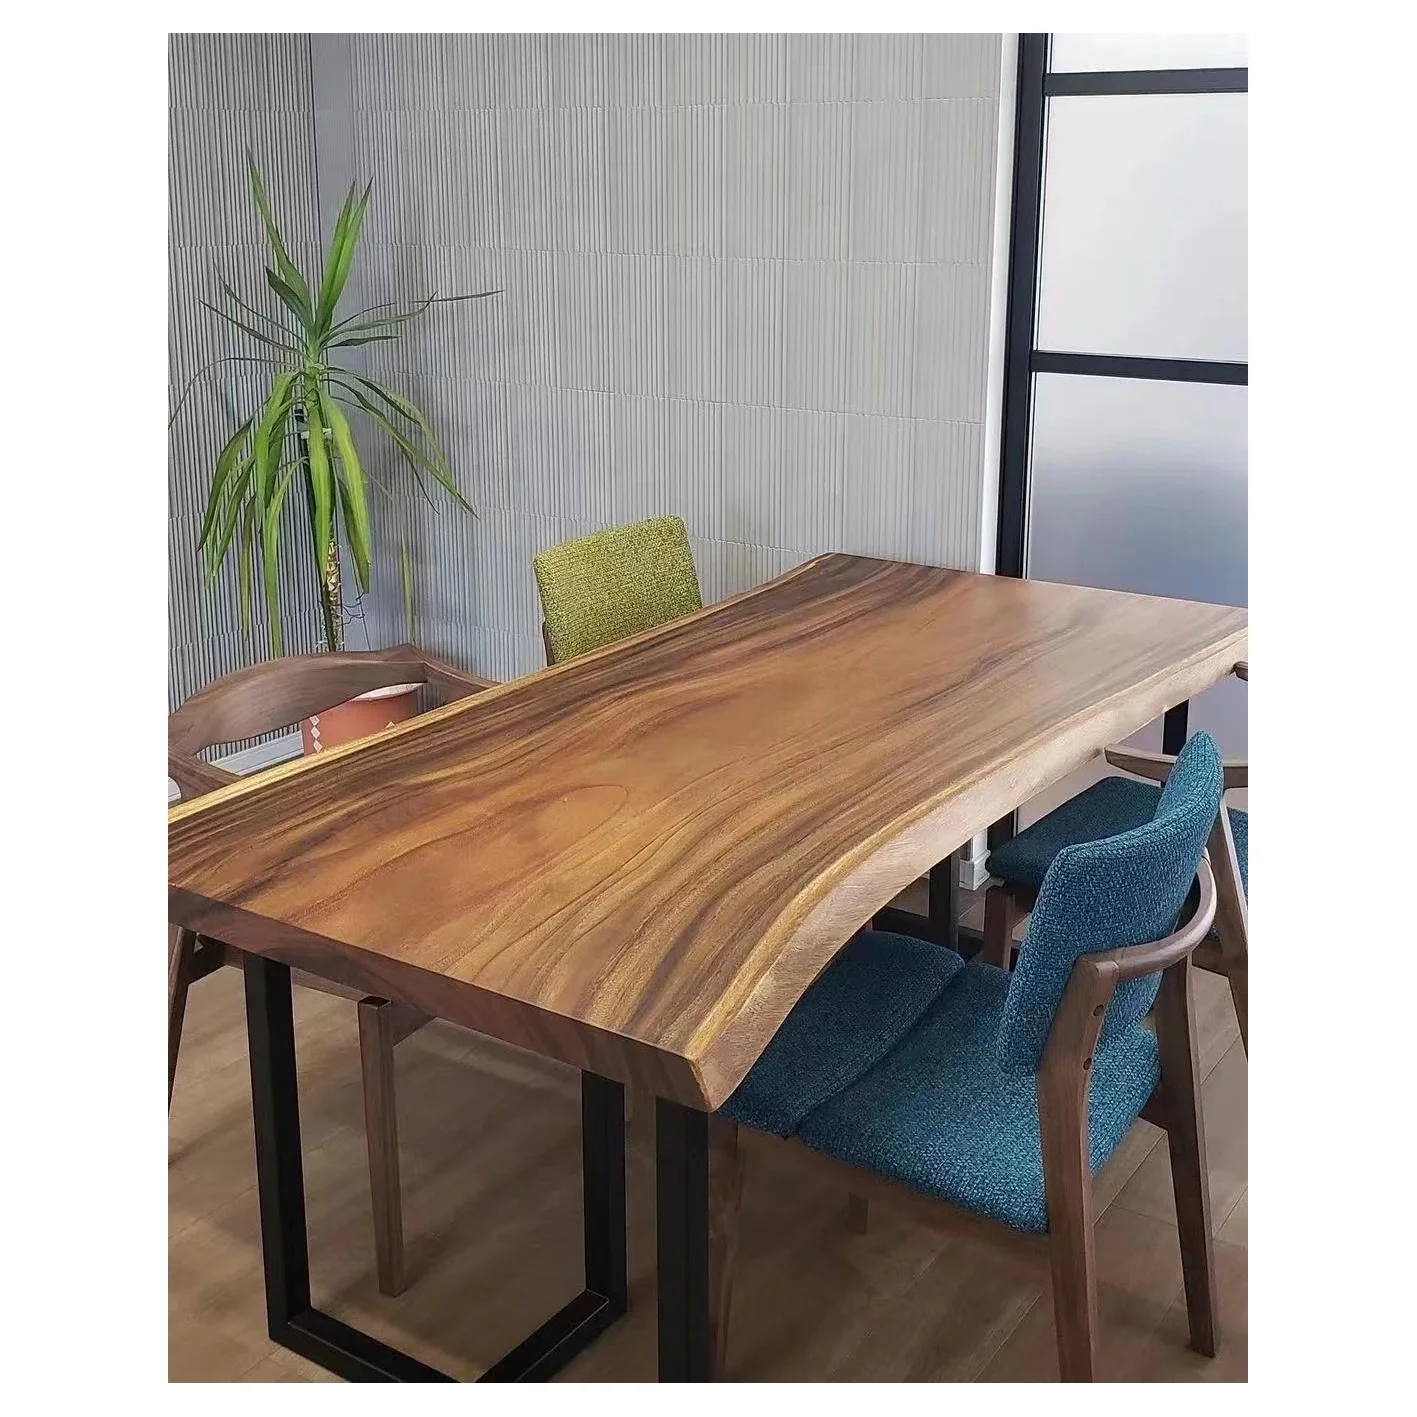 https://ae01.alicdn.com/kf/S67b1377ff63441d78b611dd74efc769eQ/Large-size-irregular-shaped-wood-dining-table-top-live-edge-solid-walnut-wood-slab.jpg